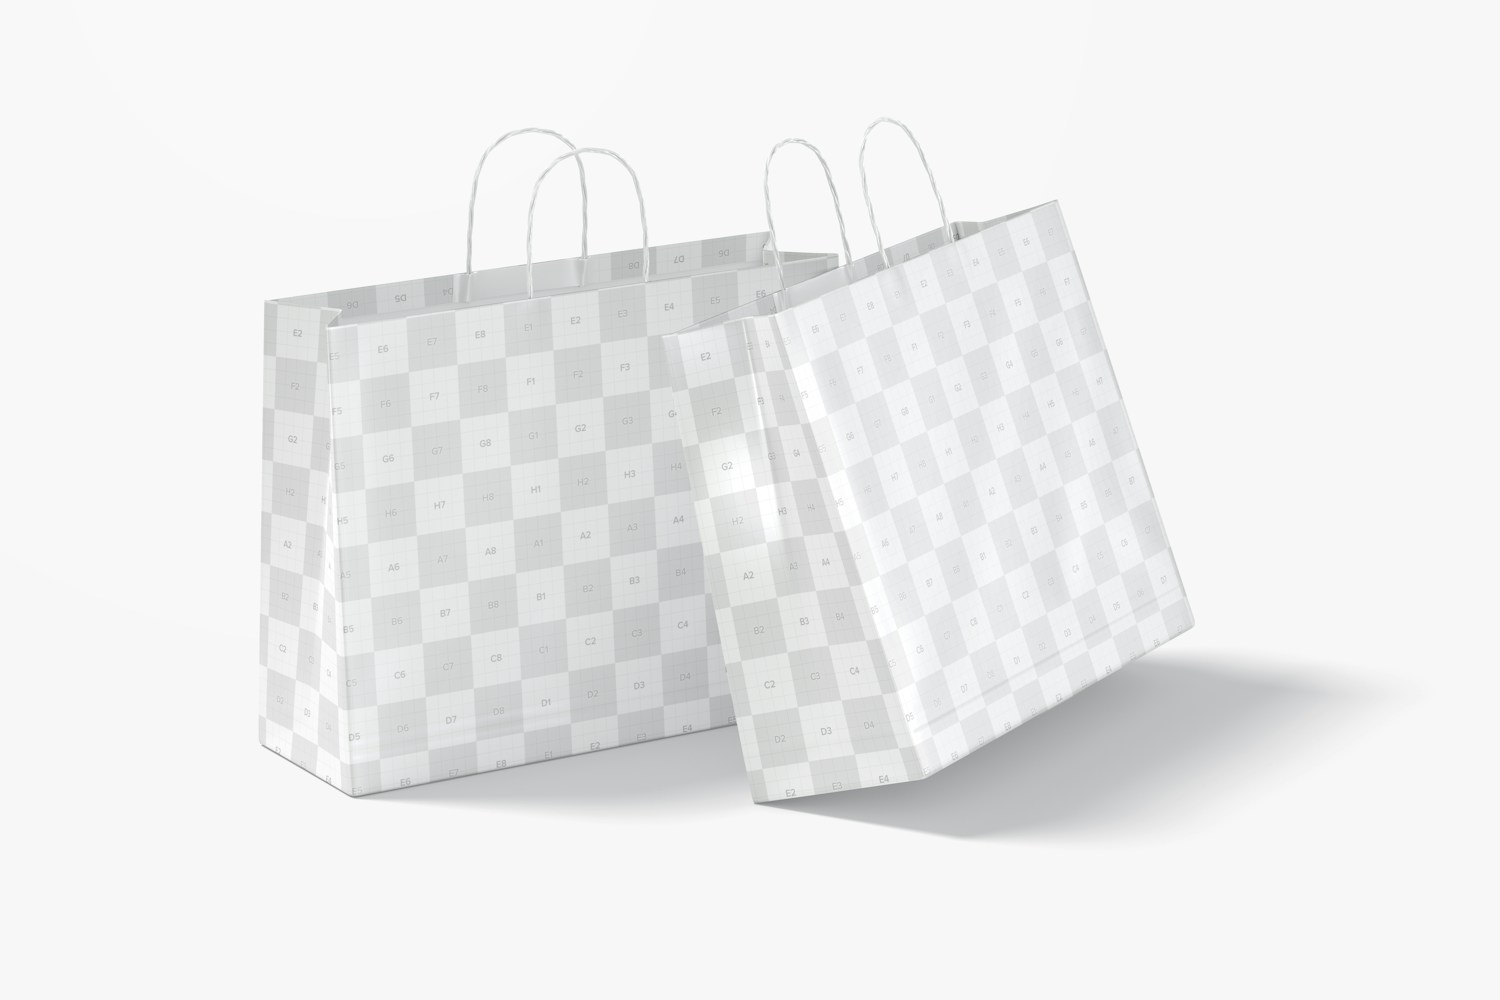 Jumbo Paper Shopping Bags Mockup, Perspective